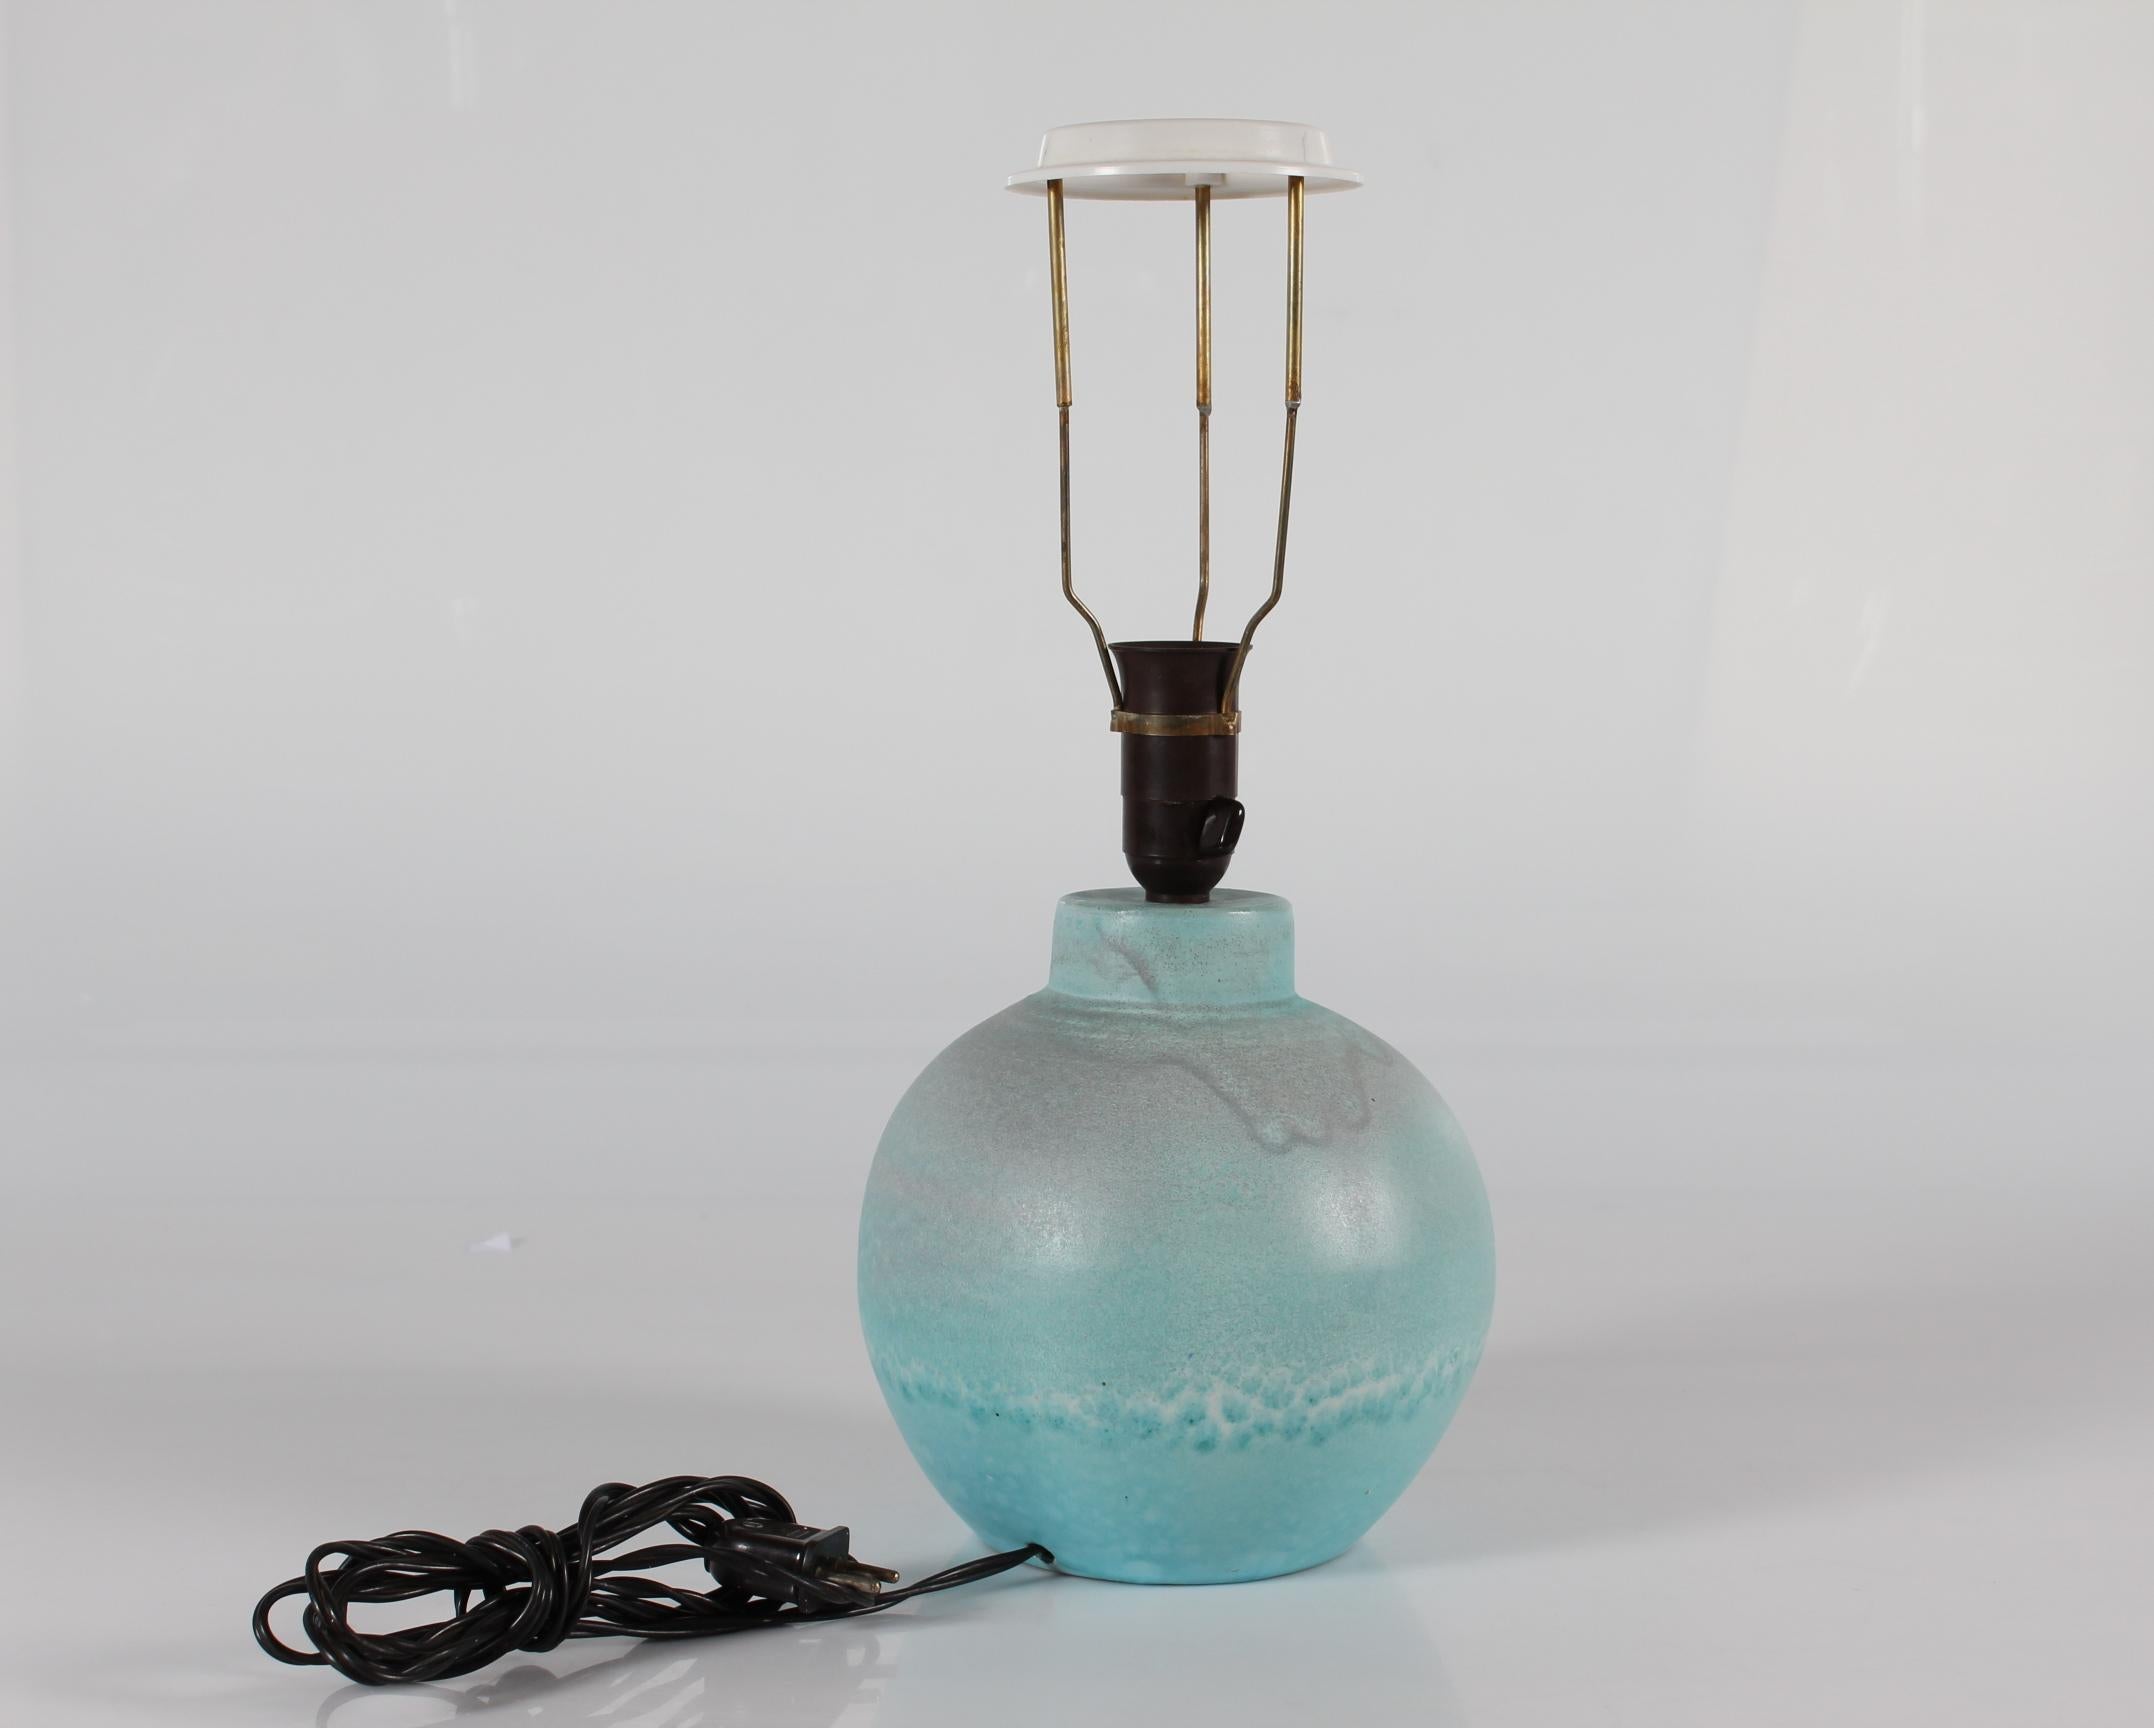 Danish Art Deco Ceramic Table Lamp with Light Turquoise Glaze, 1940s For Sale 1